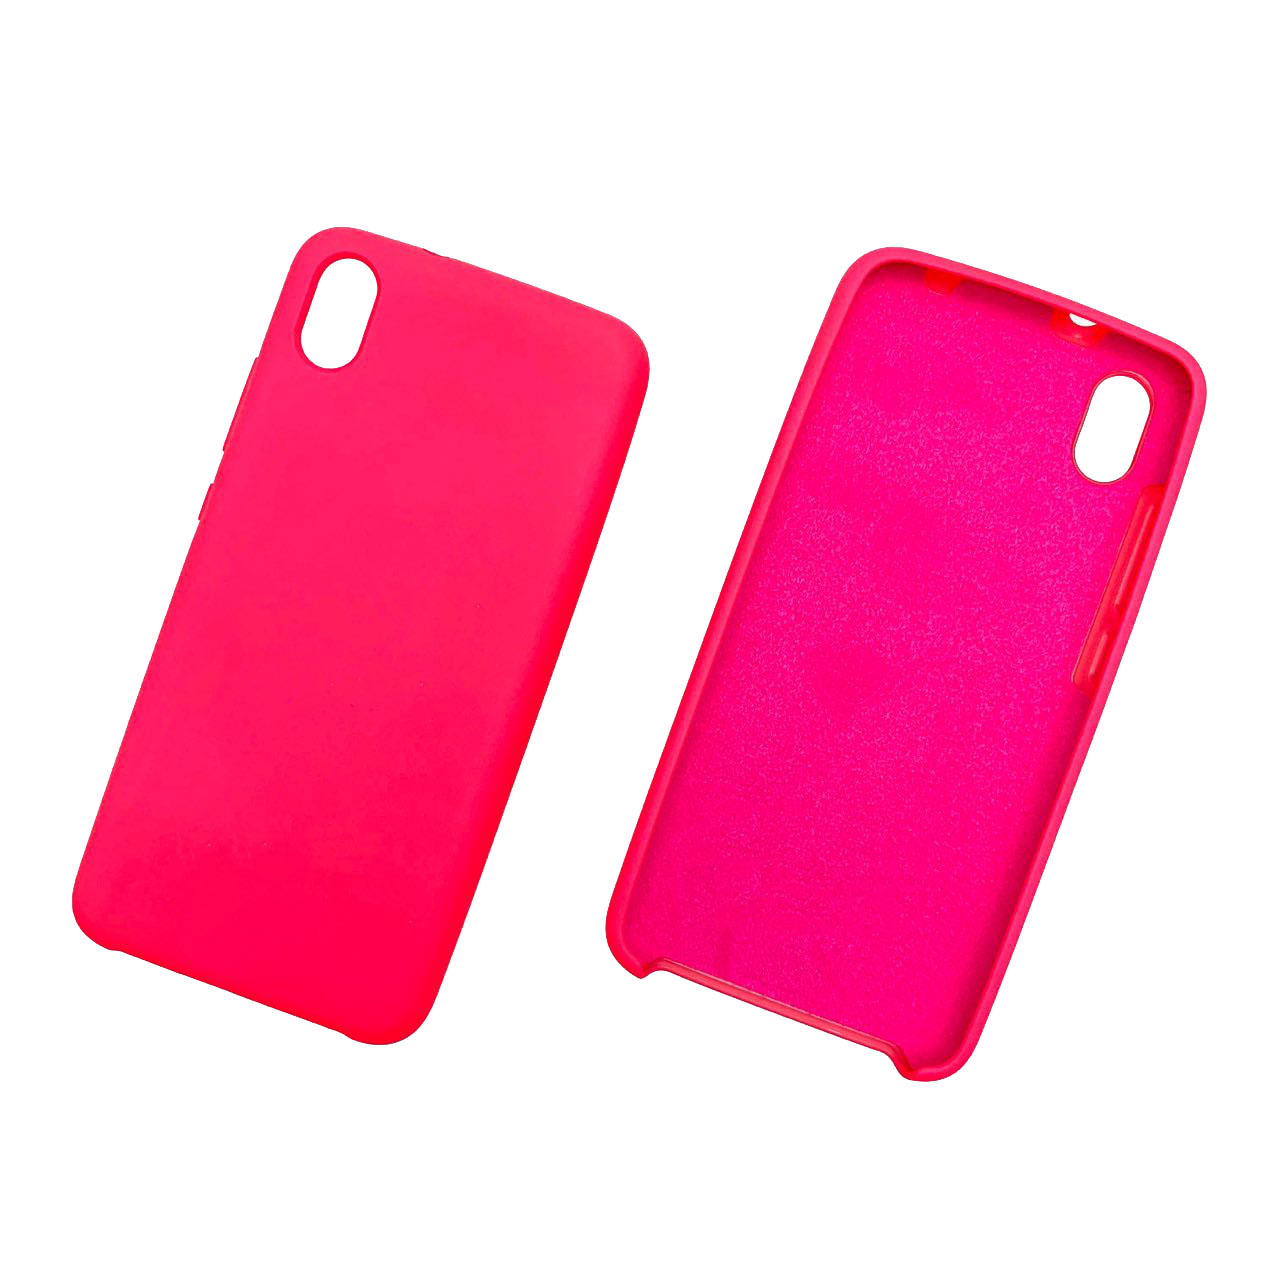 Чехол накладка Silicon Cover для XIAOMI Redmi 7A, силикон, бархат, цвет ярко розовый.